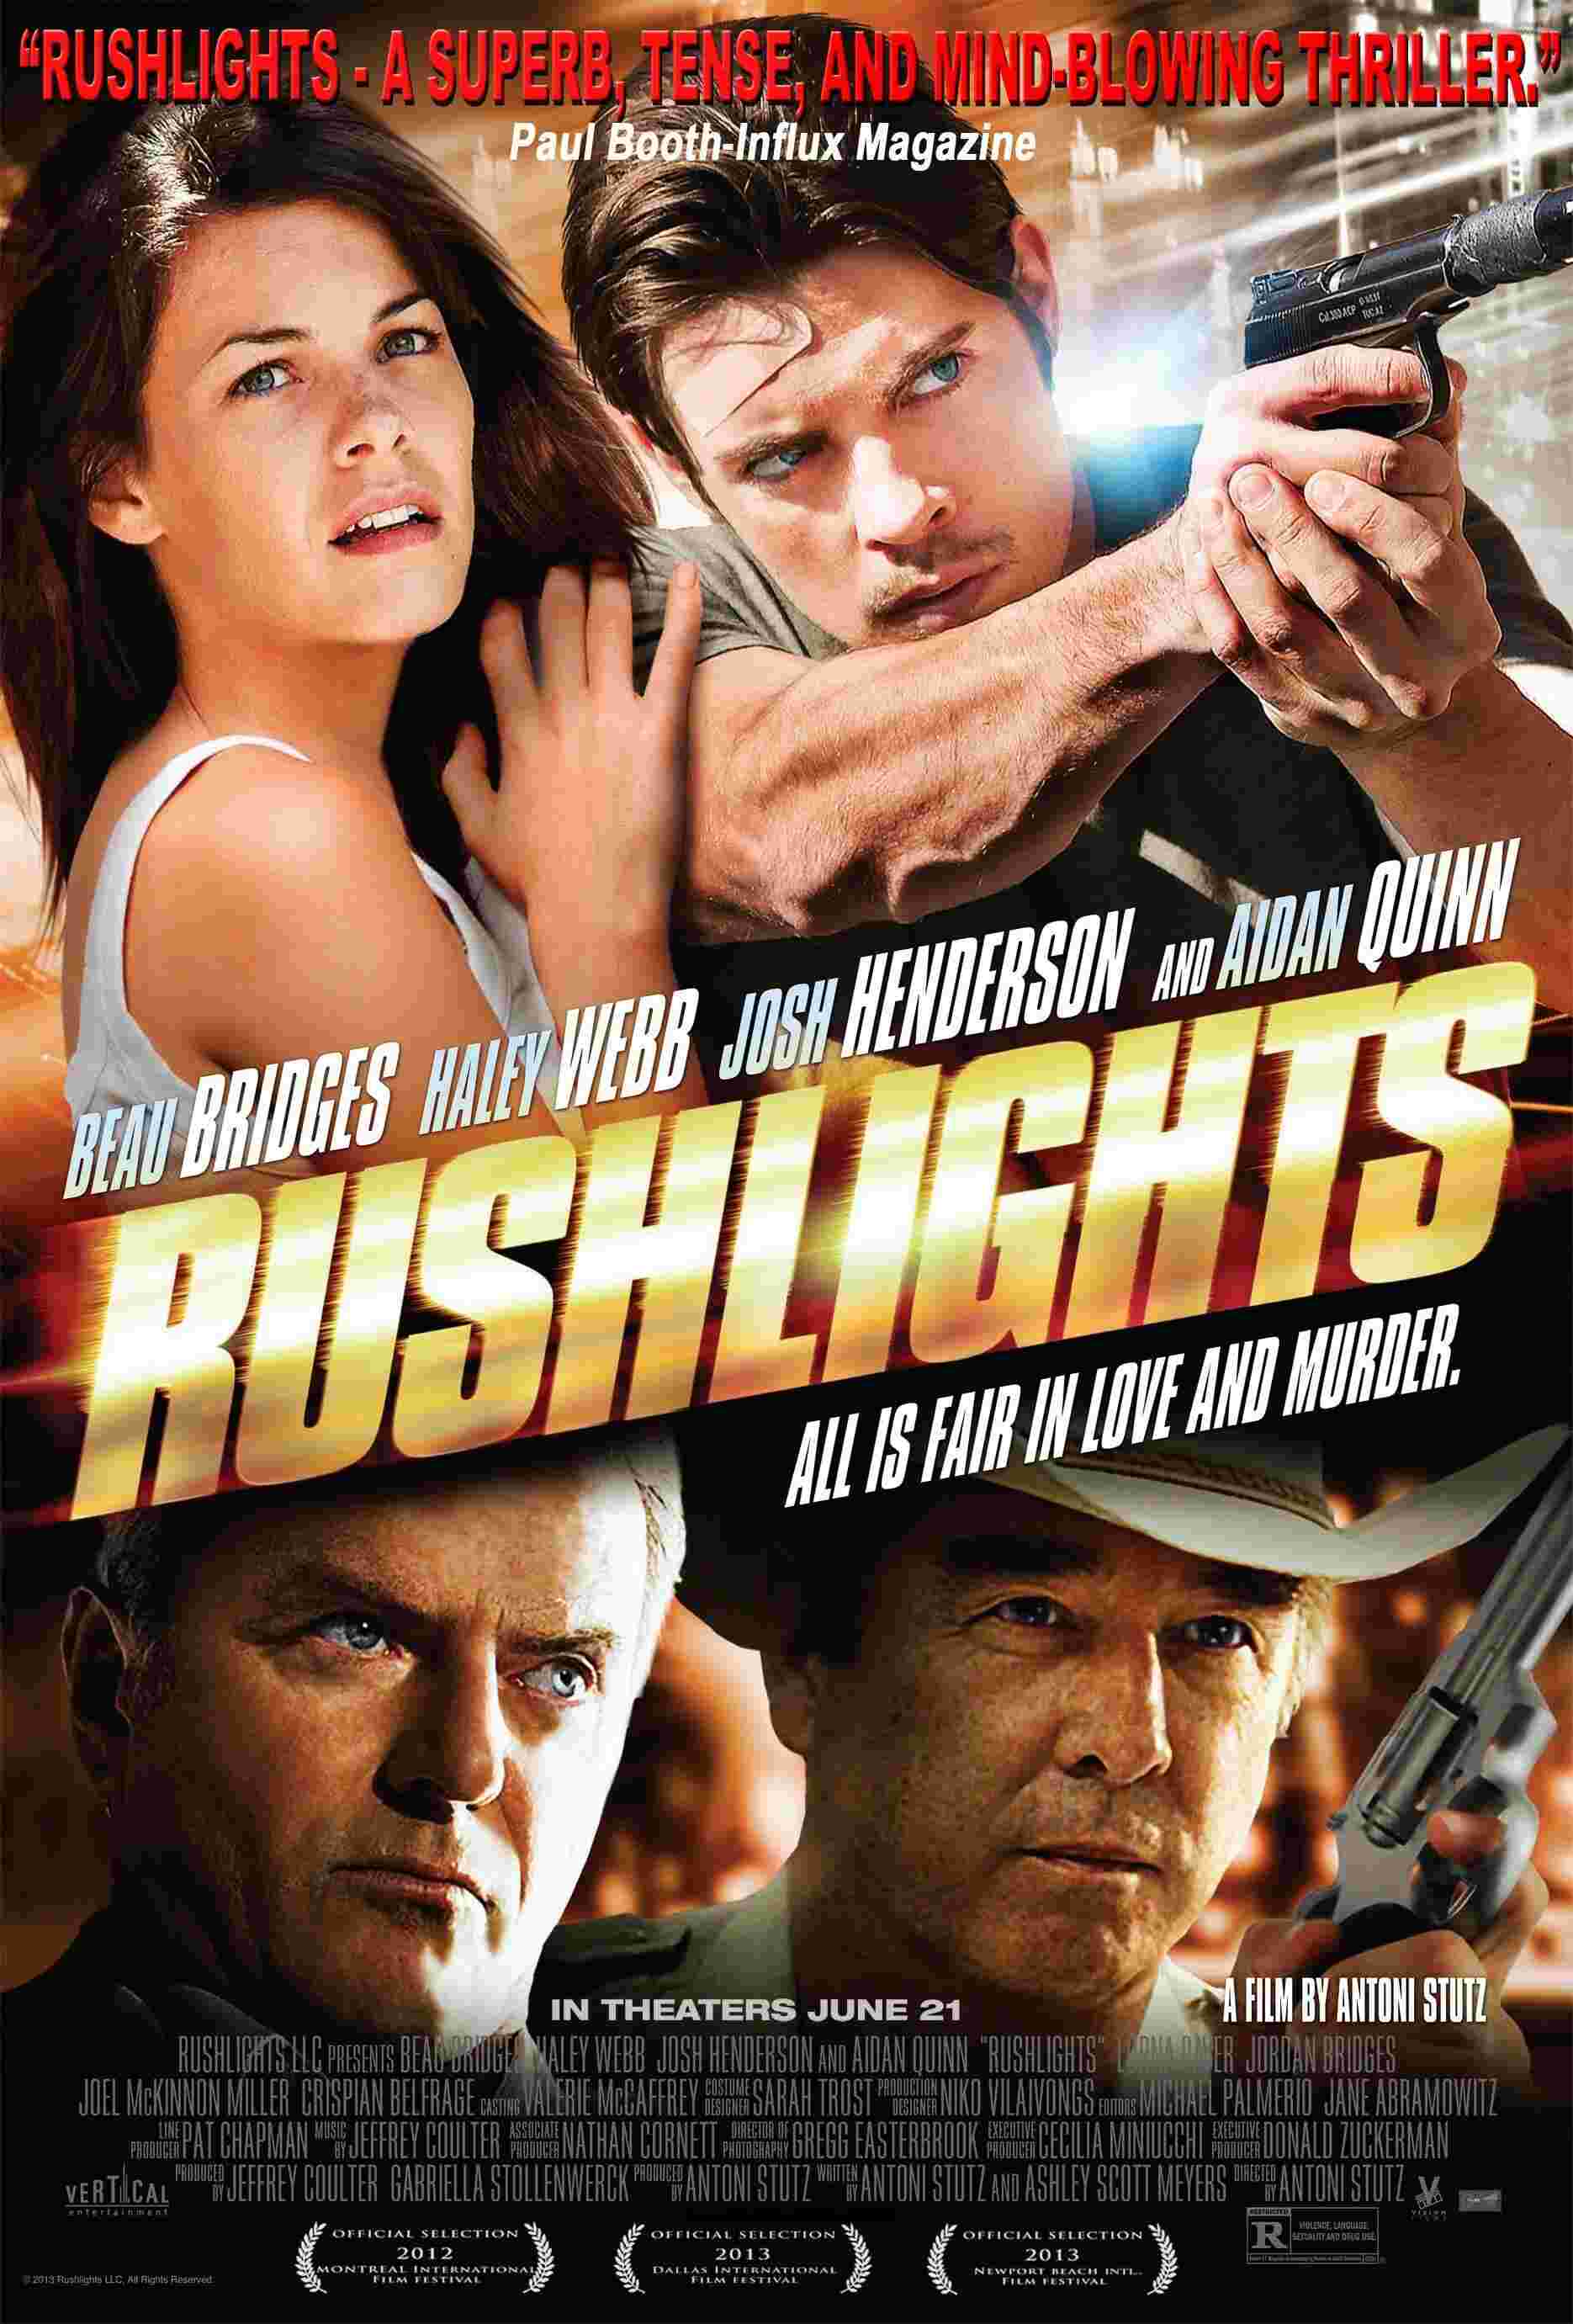 Rushlights (2013) Beau Bridges